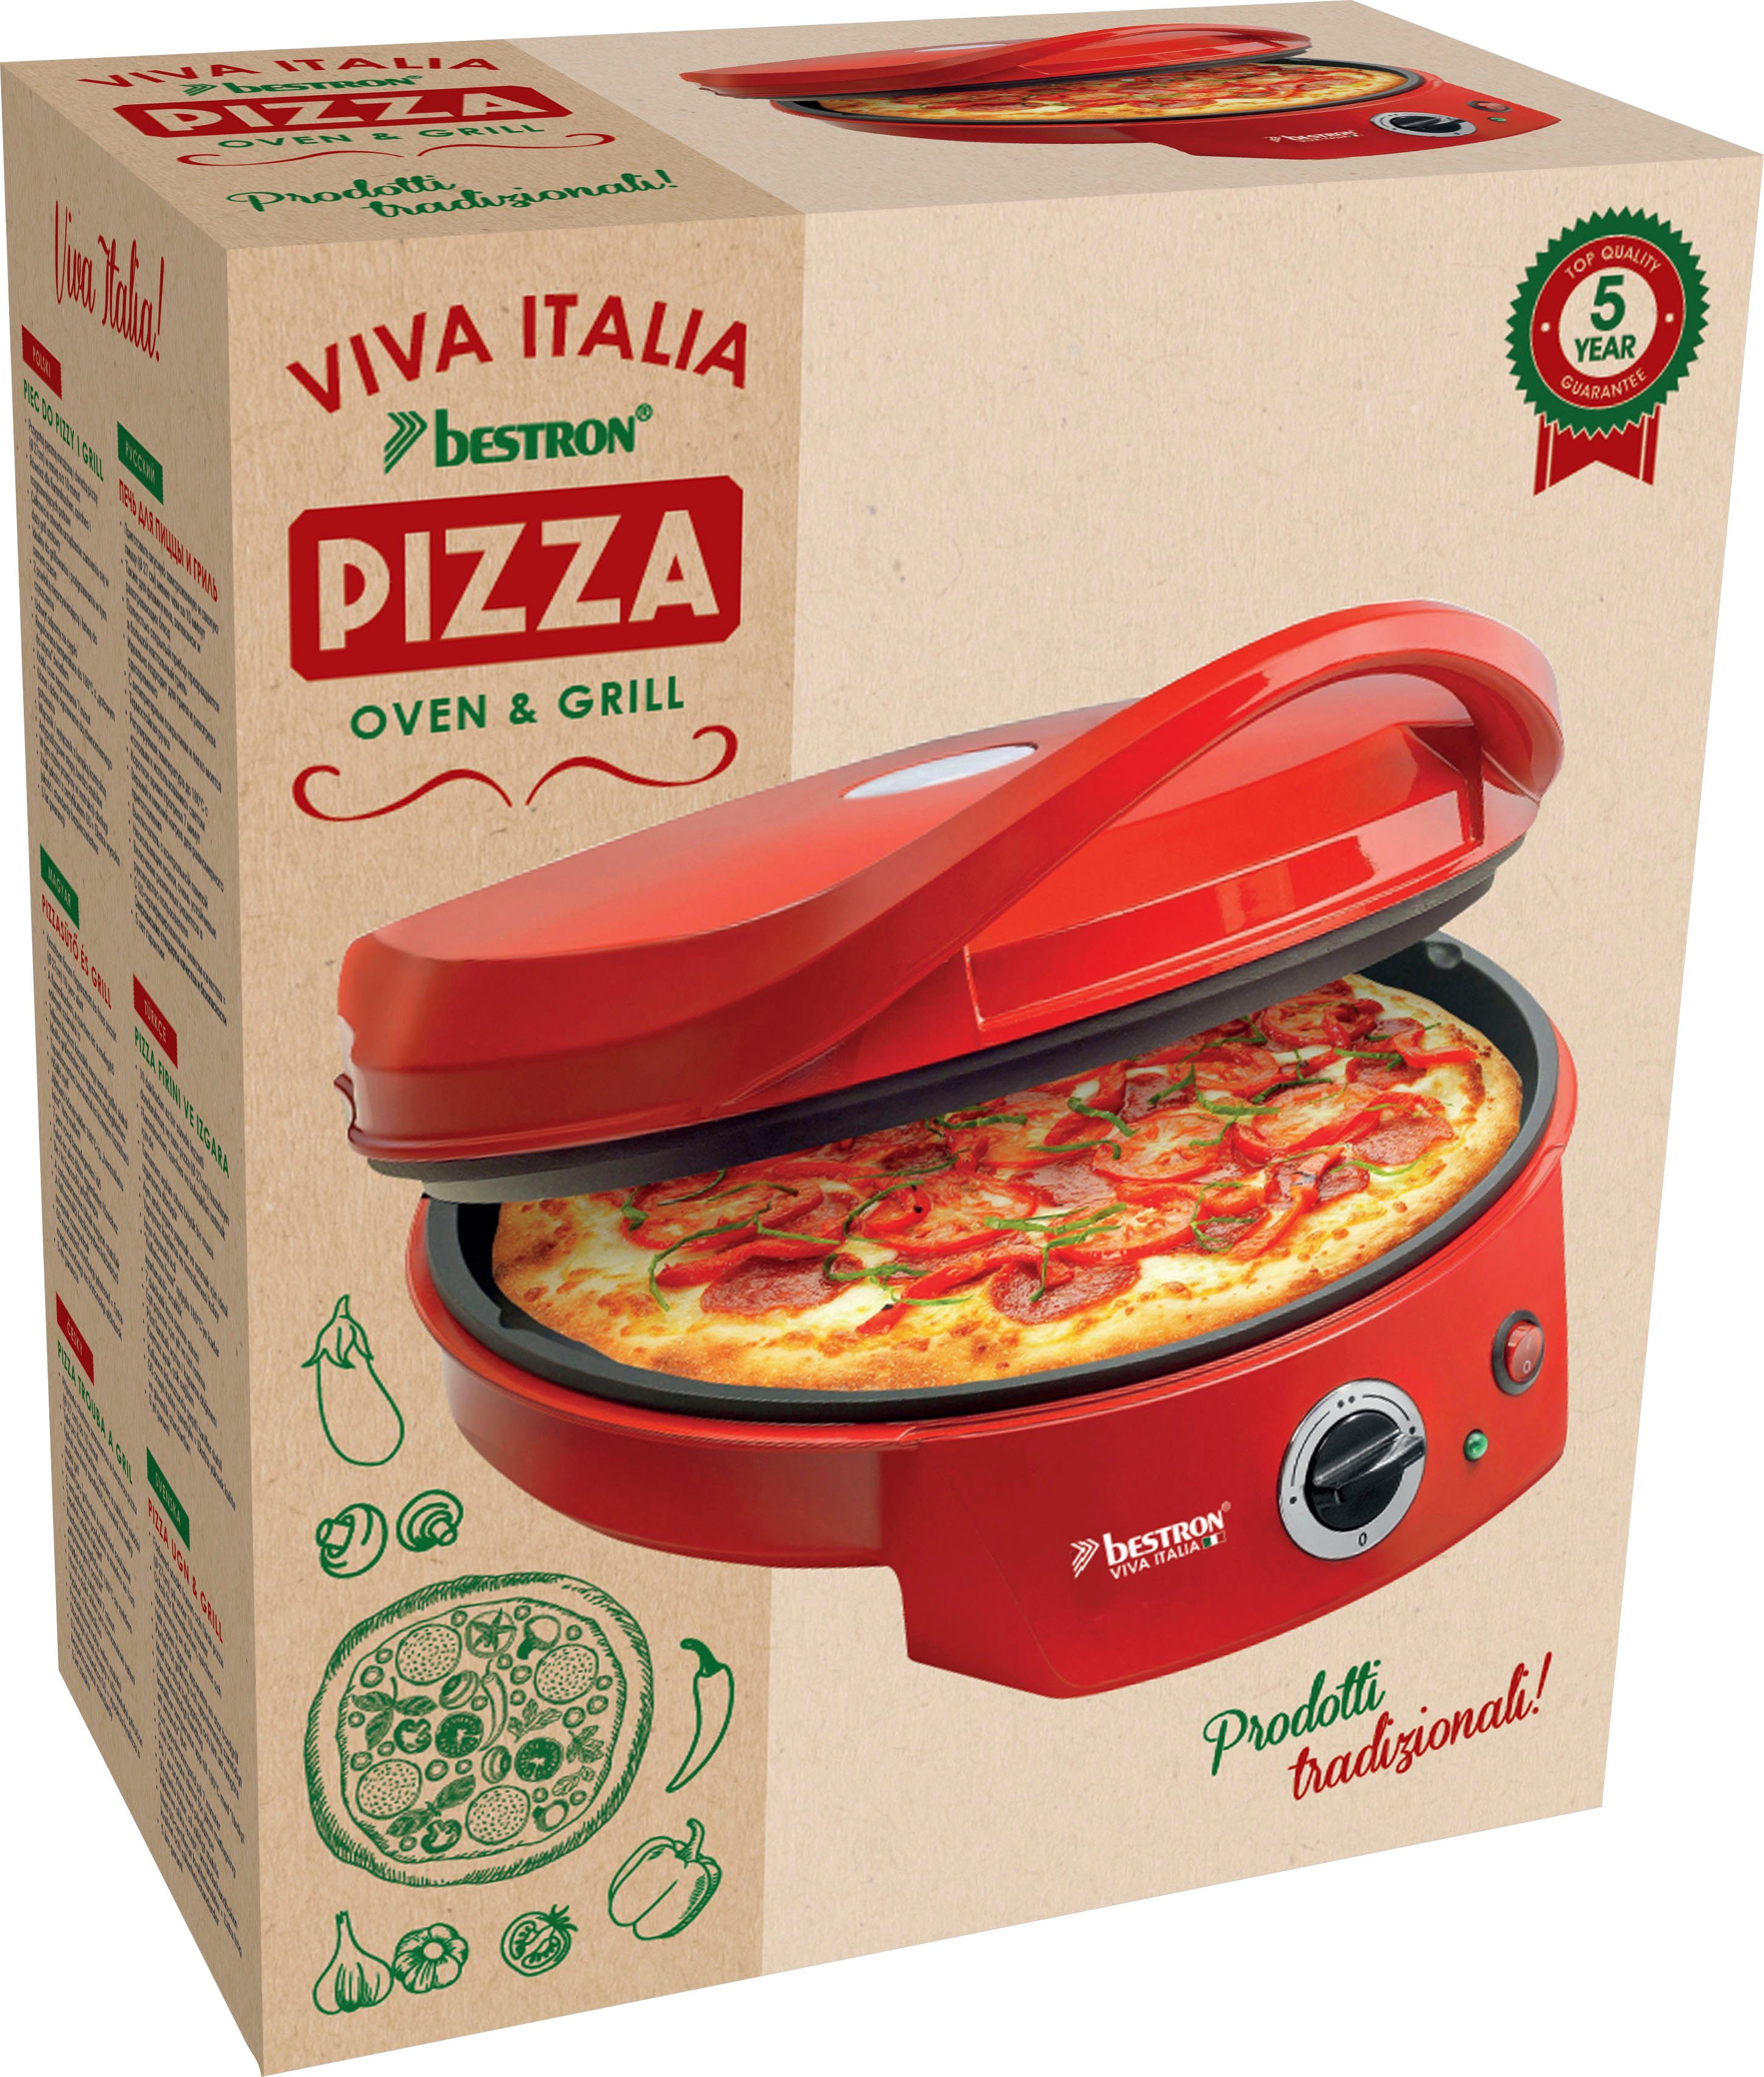 Italia, Ober-/Unterhitze, 180°C, Viva 1800 APZ400 Rot max. Pizzaofen Bis bestron Watt,